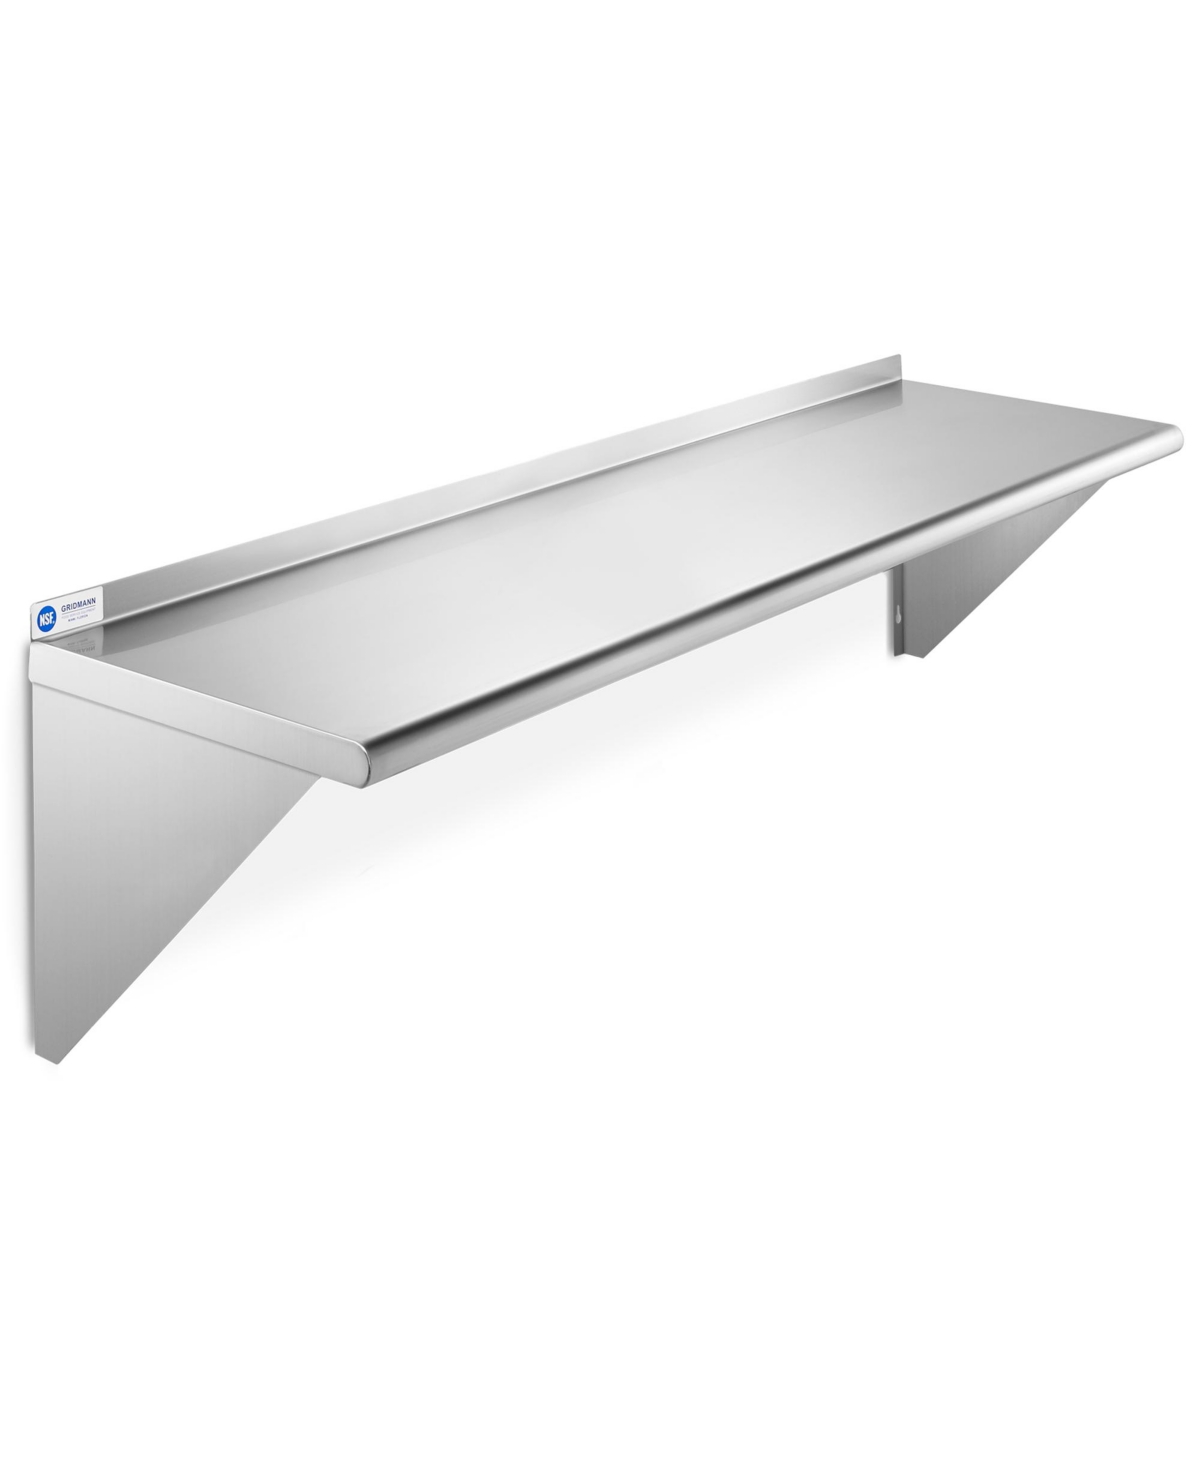 14" x 48" Nsf Stainless Steel Kitchen Wall Mount Shelf w/ Backsplash - Silver